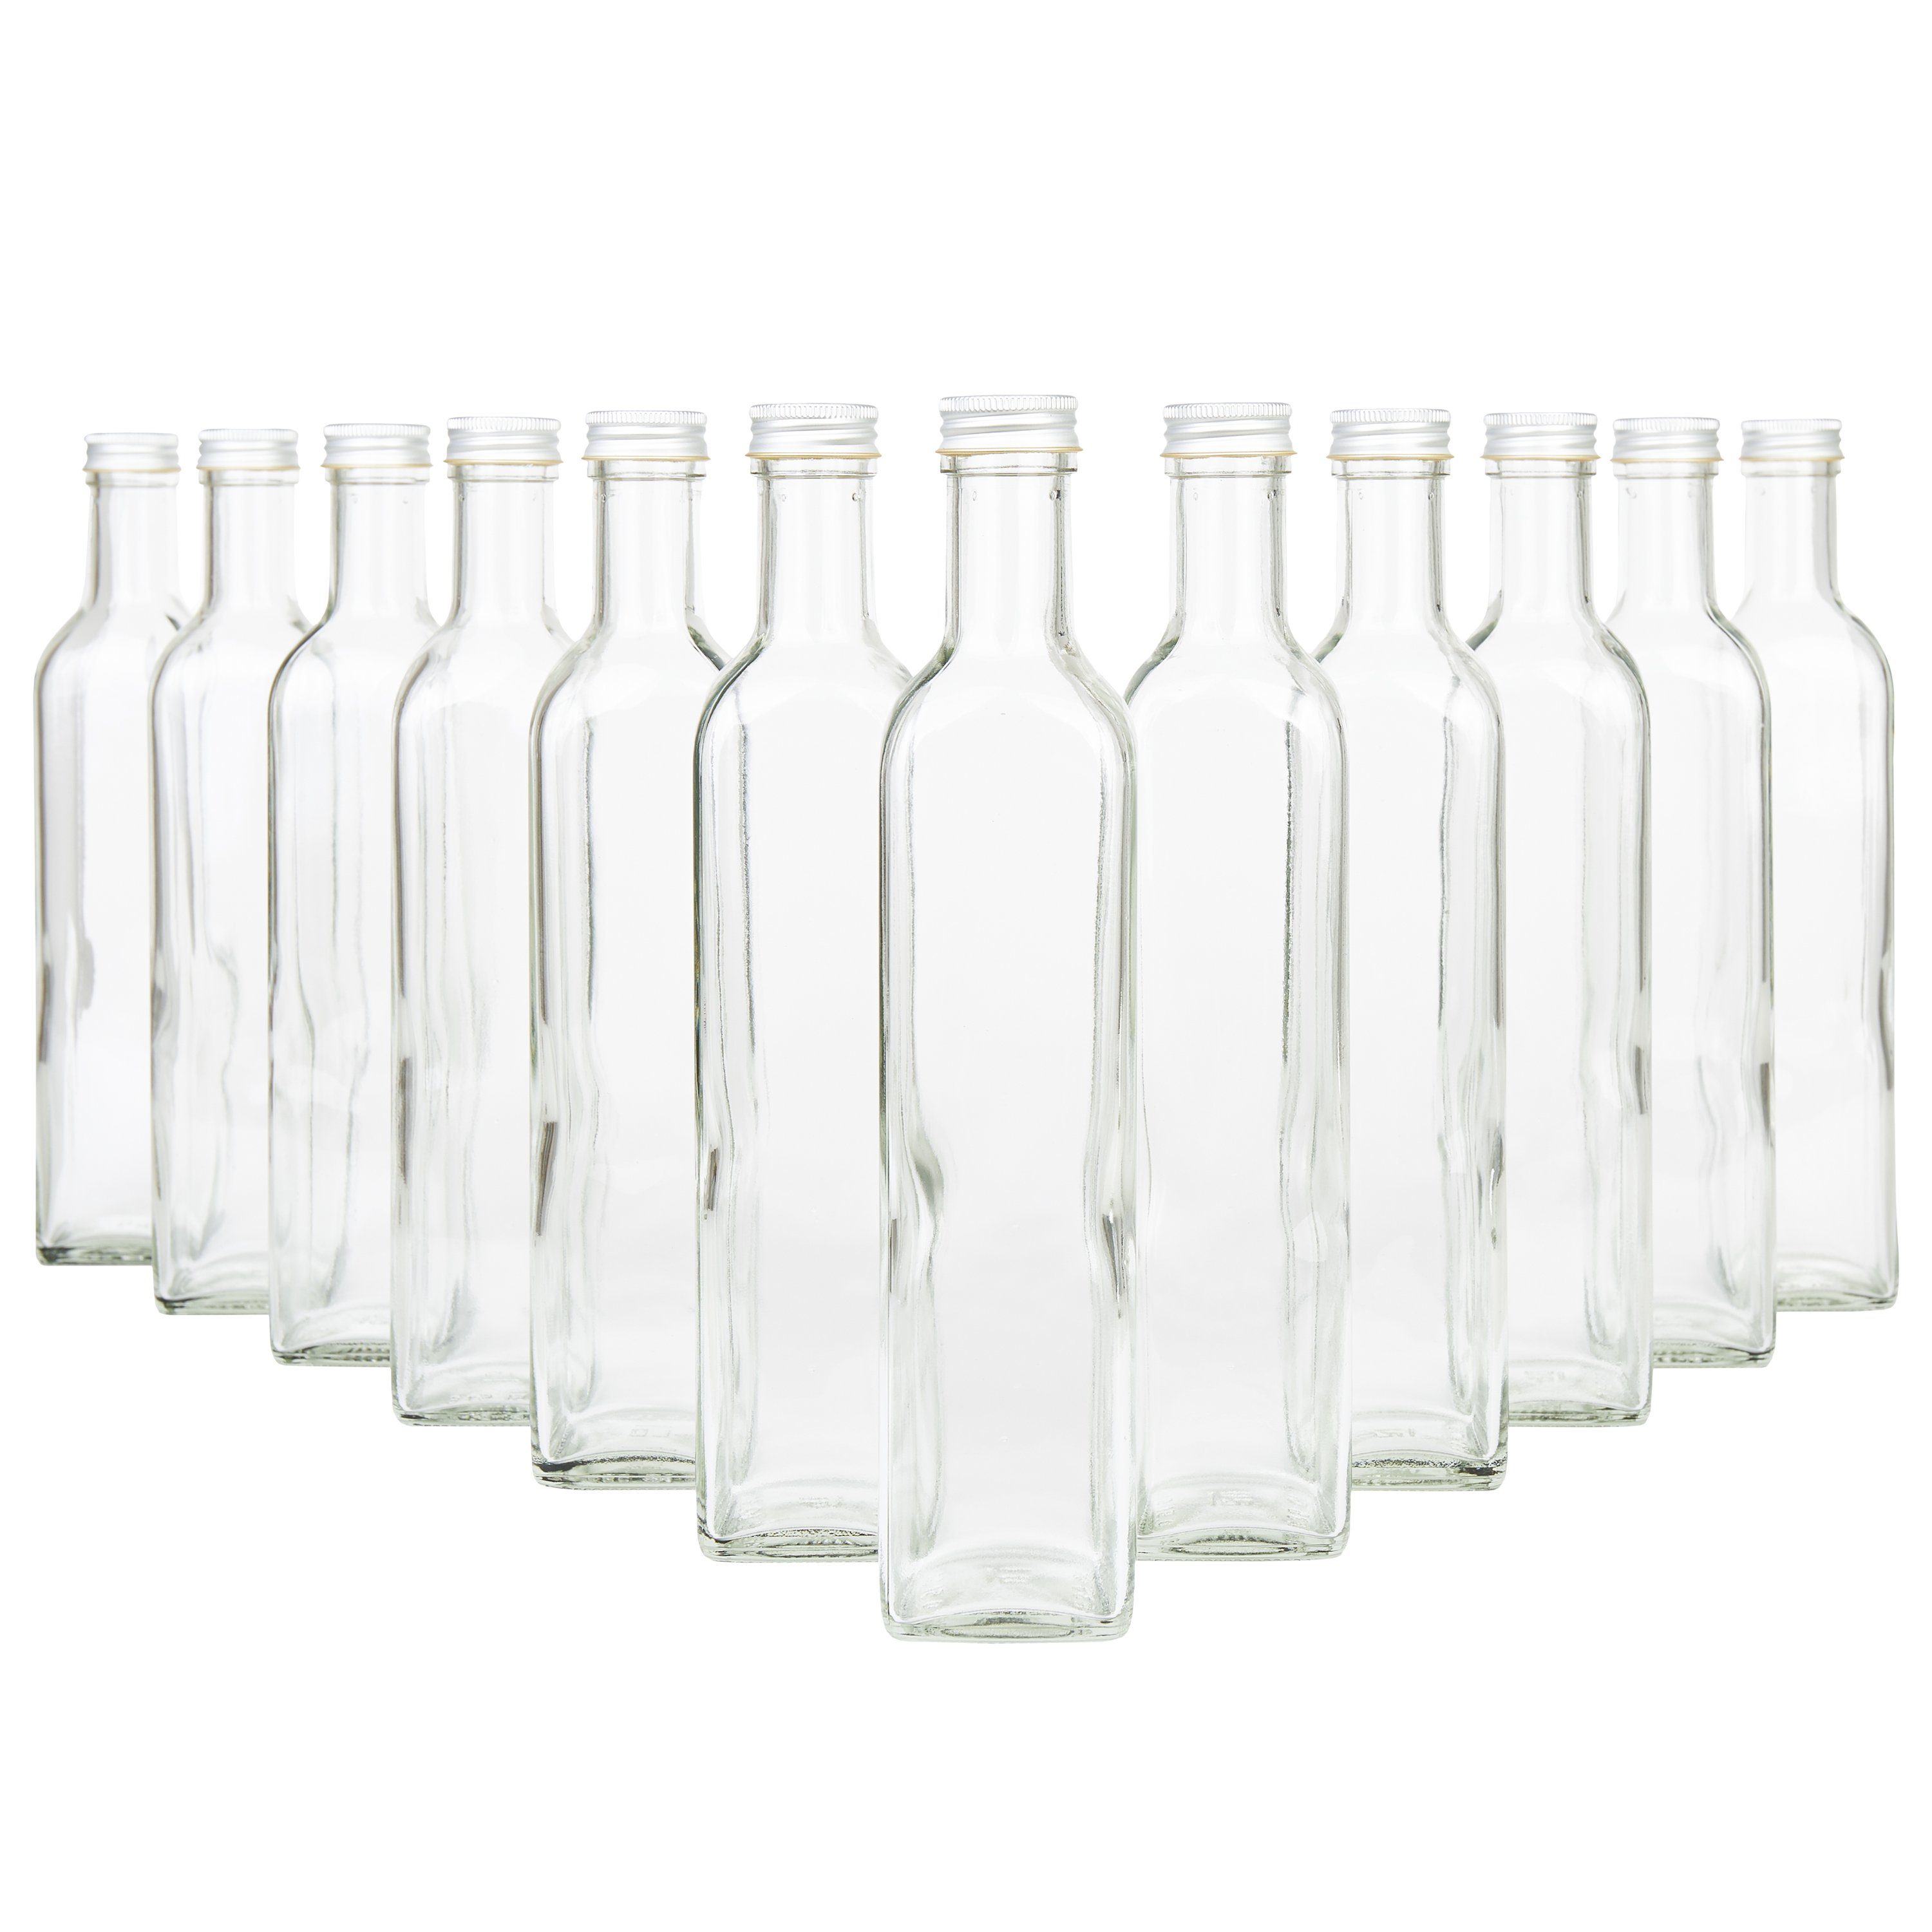 silber 12er Set 500ml Einmachglas Aluminium Glas Schraubdeckel PP31,5, + Marasca Flasche MamboCat